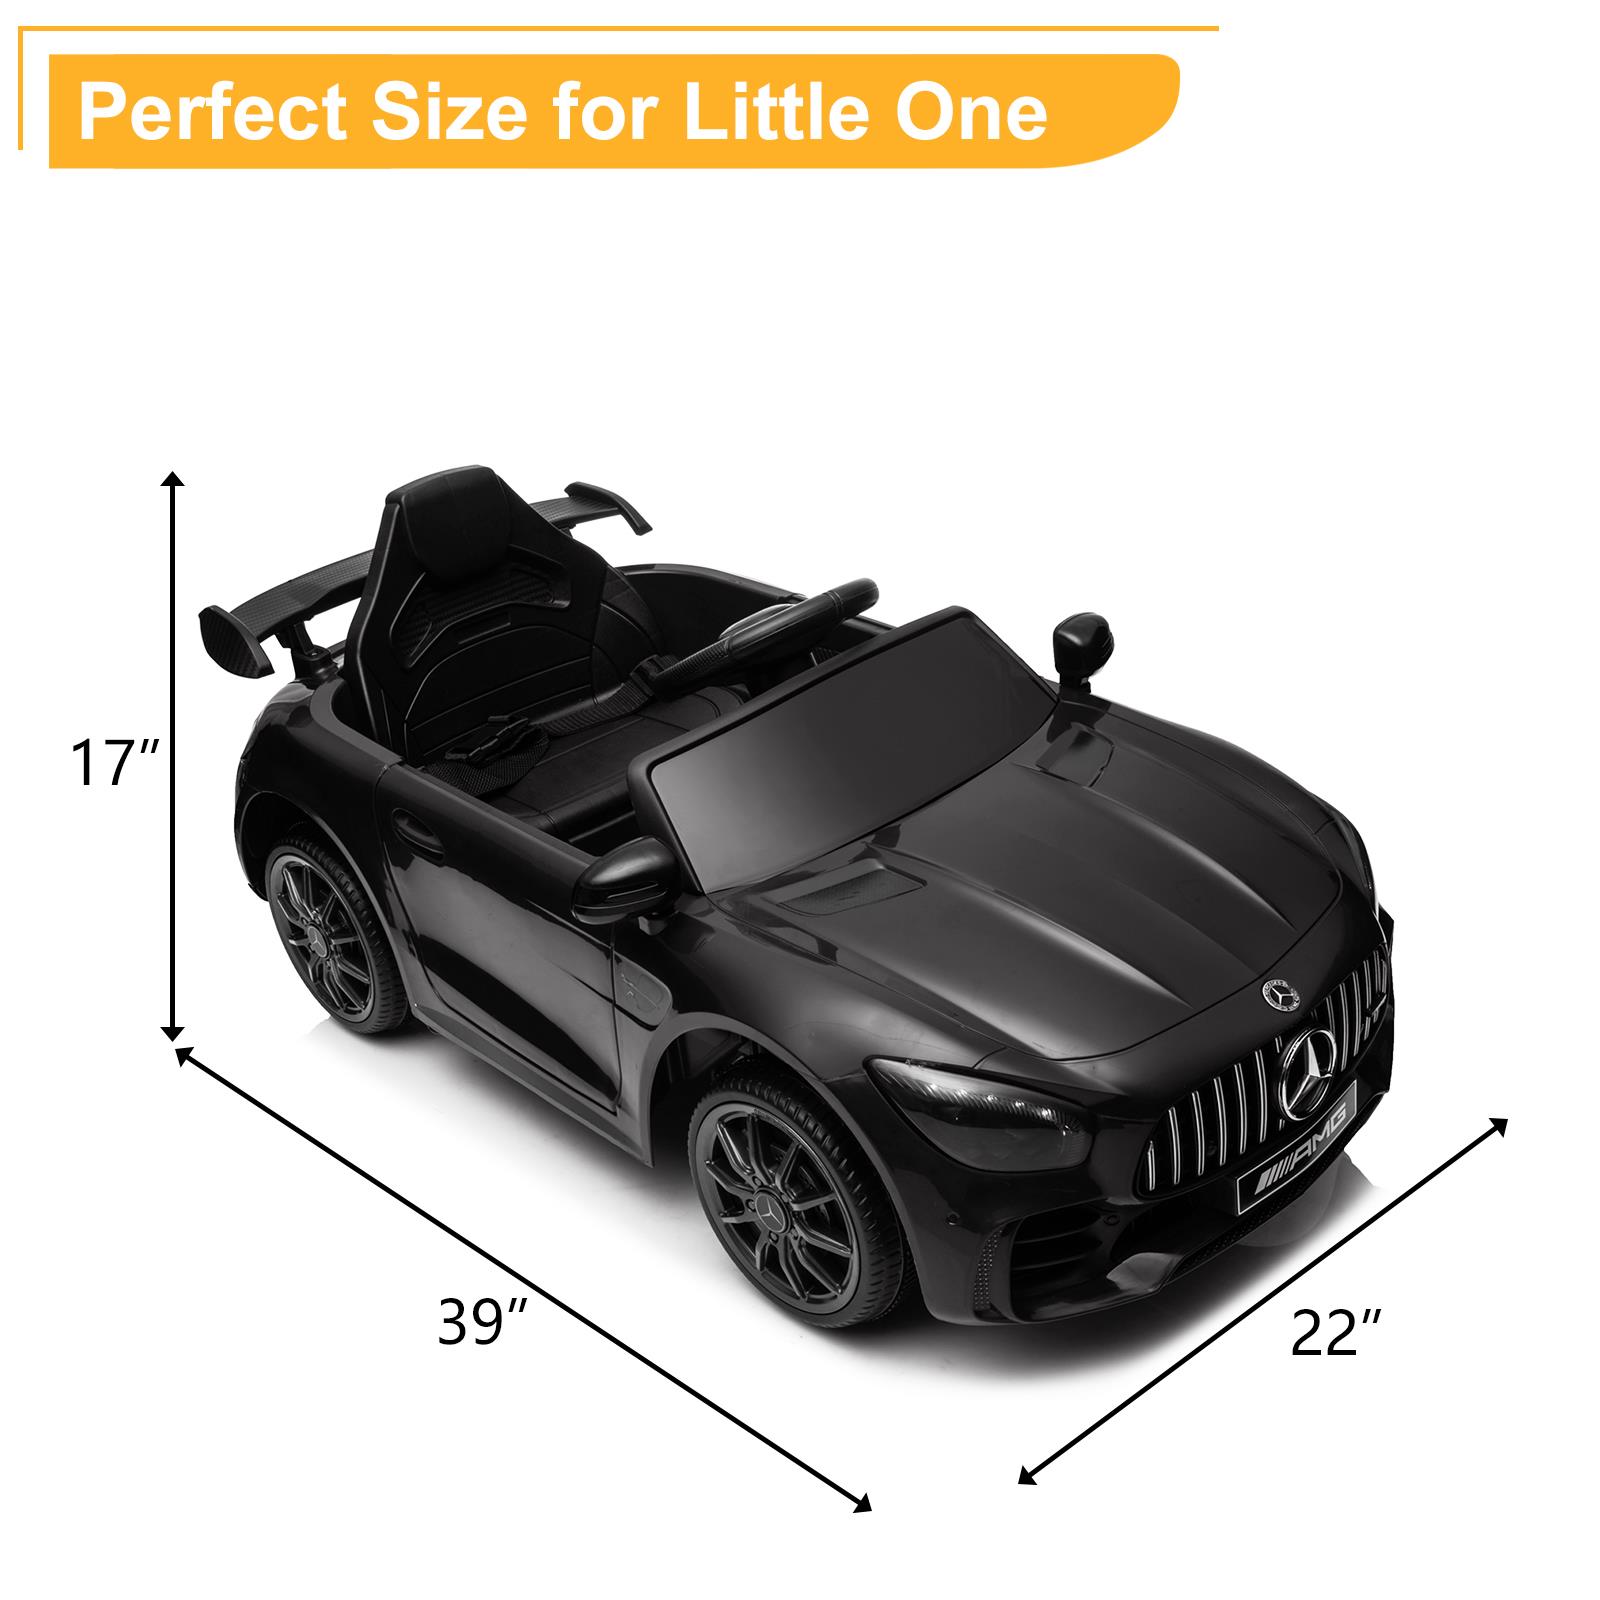 UBesGoo 12V Licensed Mercedes-Benz Electric Ride on Car Toy for Toddler Kid w/ Remote Control, LED Lights, Black - image 3 of 11